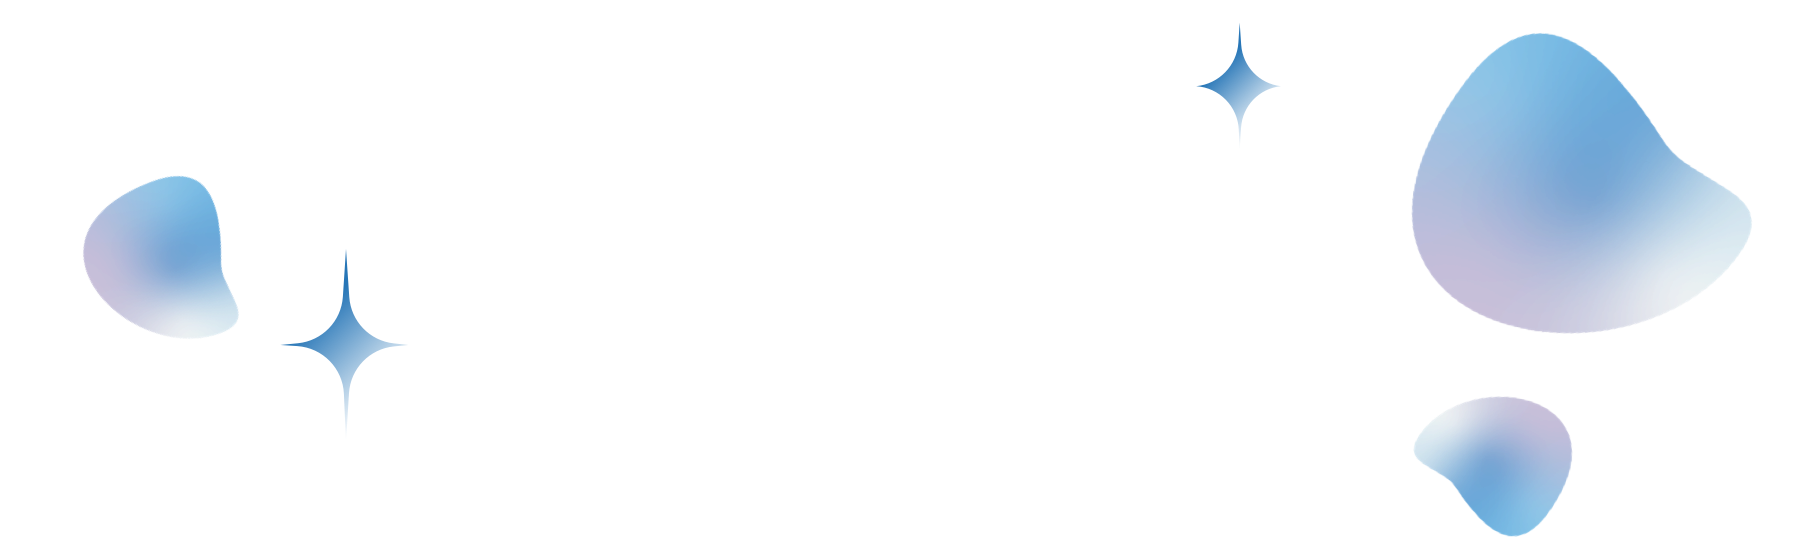 Amex Experiences Wordmark